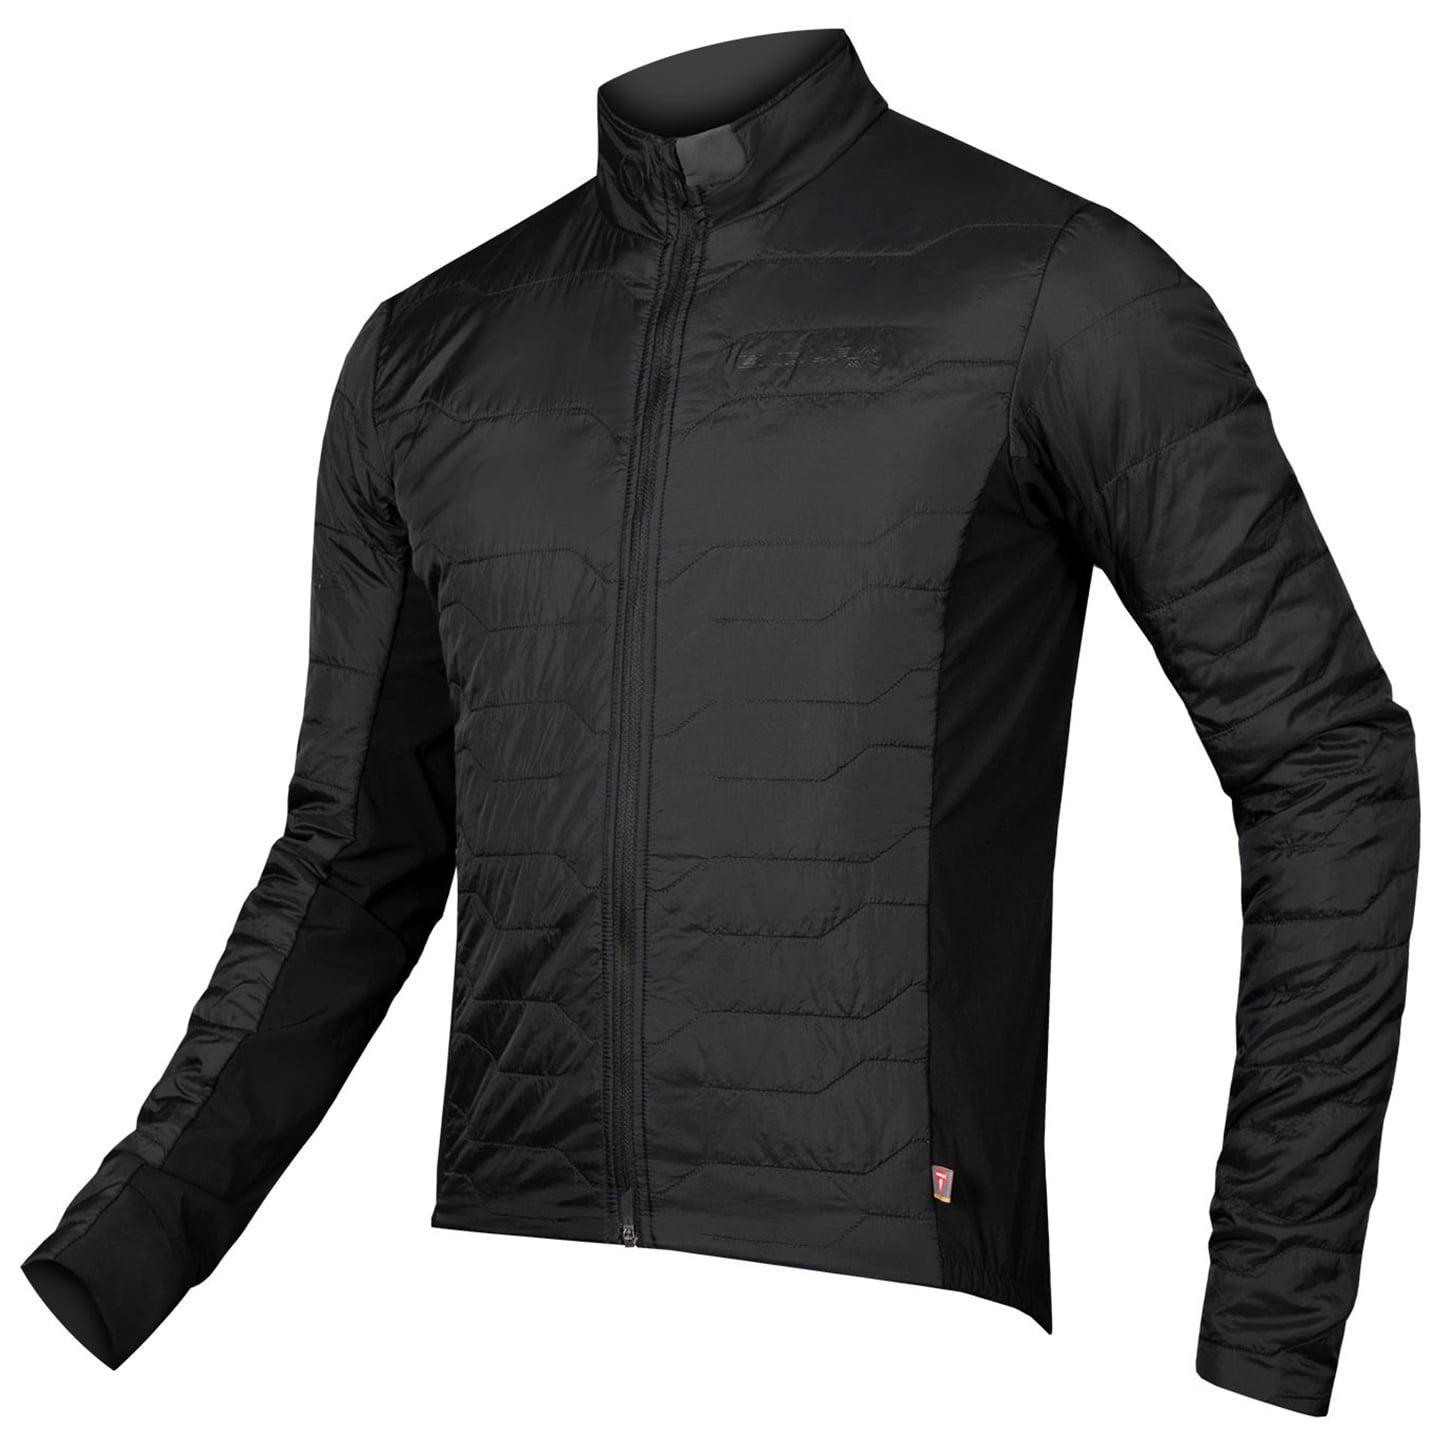 ENDURA Winter Jacket Pro SL Primaloft II Thermal Jacket, for men, size M, Cycle jacket, Cycling clothing